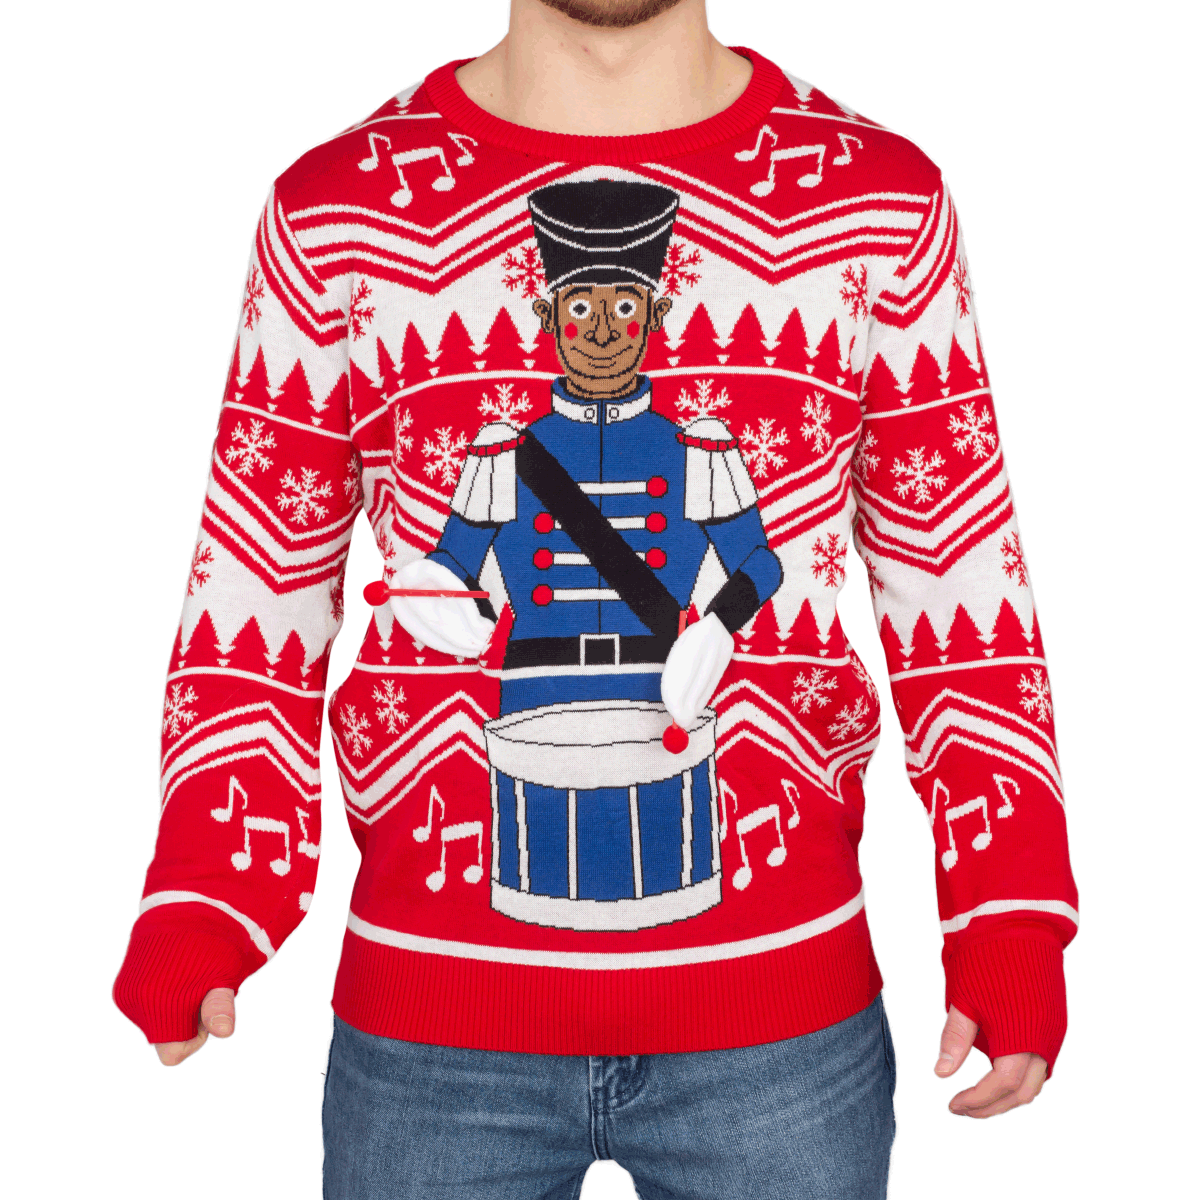 Drummer Bears Xmas Epsteam Ugly Sweater Medium Sweater Blue Christmas Sweater Vest Christmas Sweater Holiday Sweater